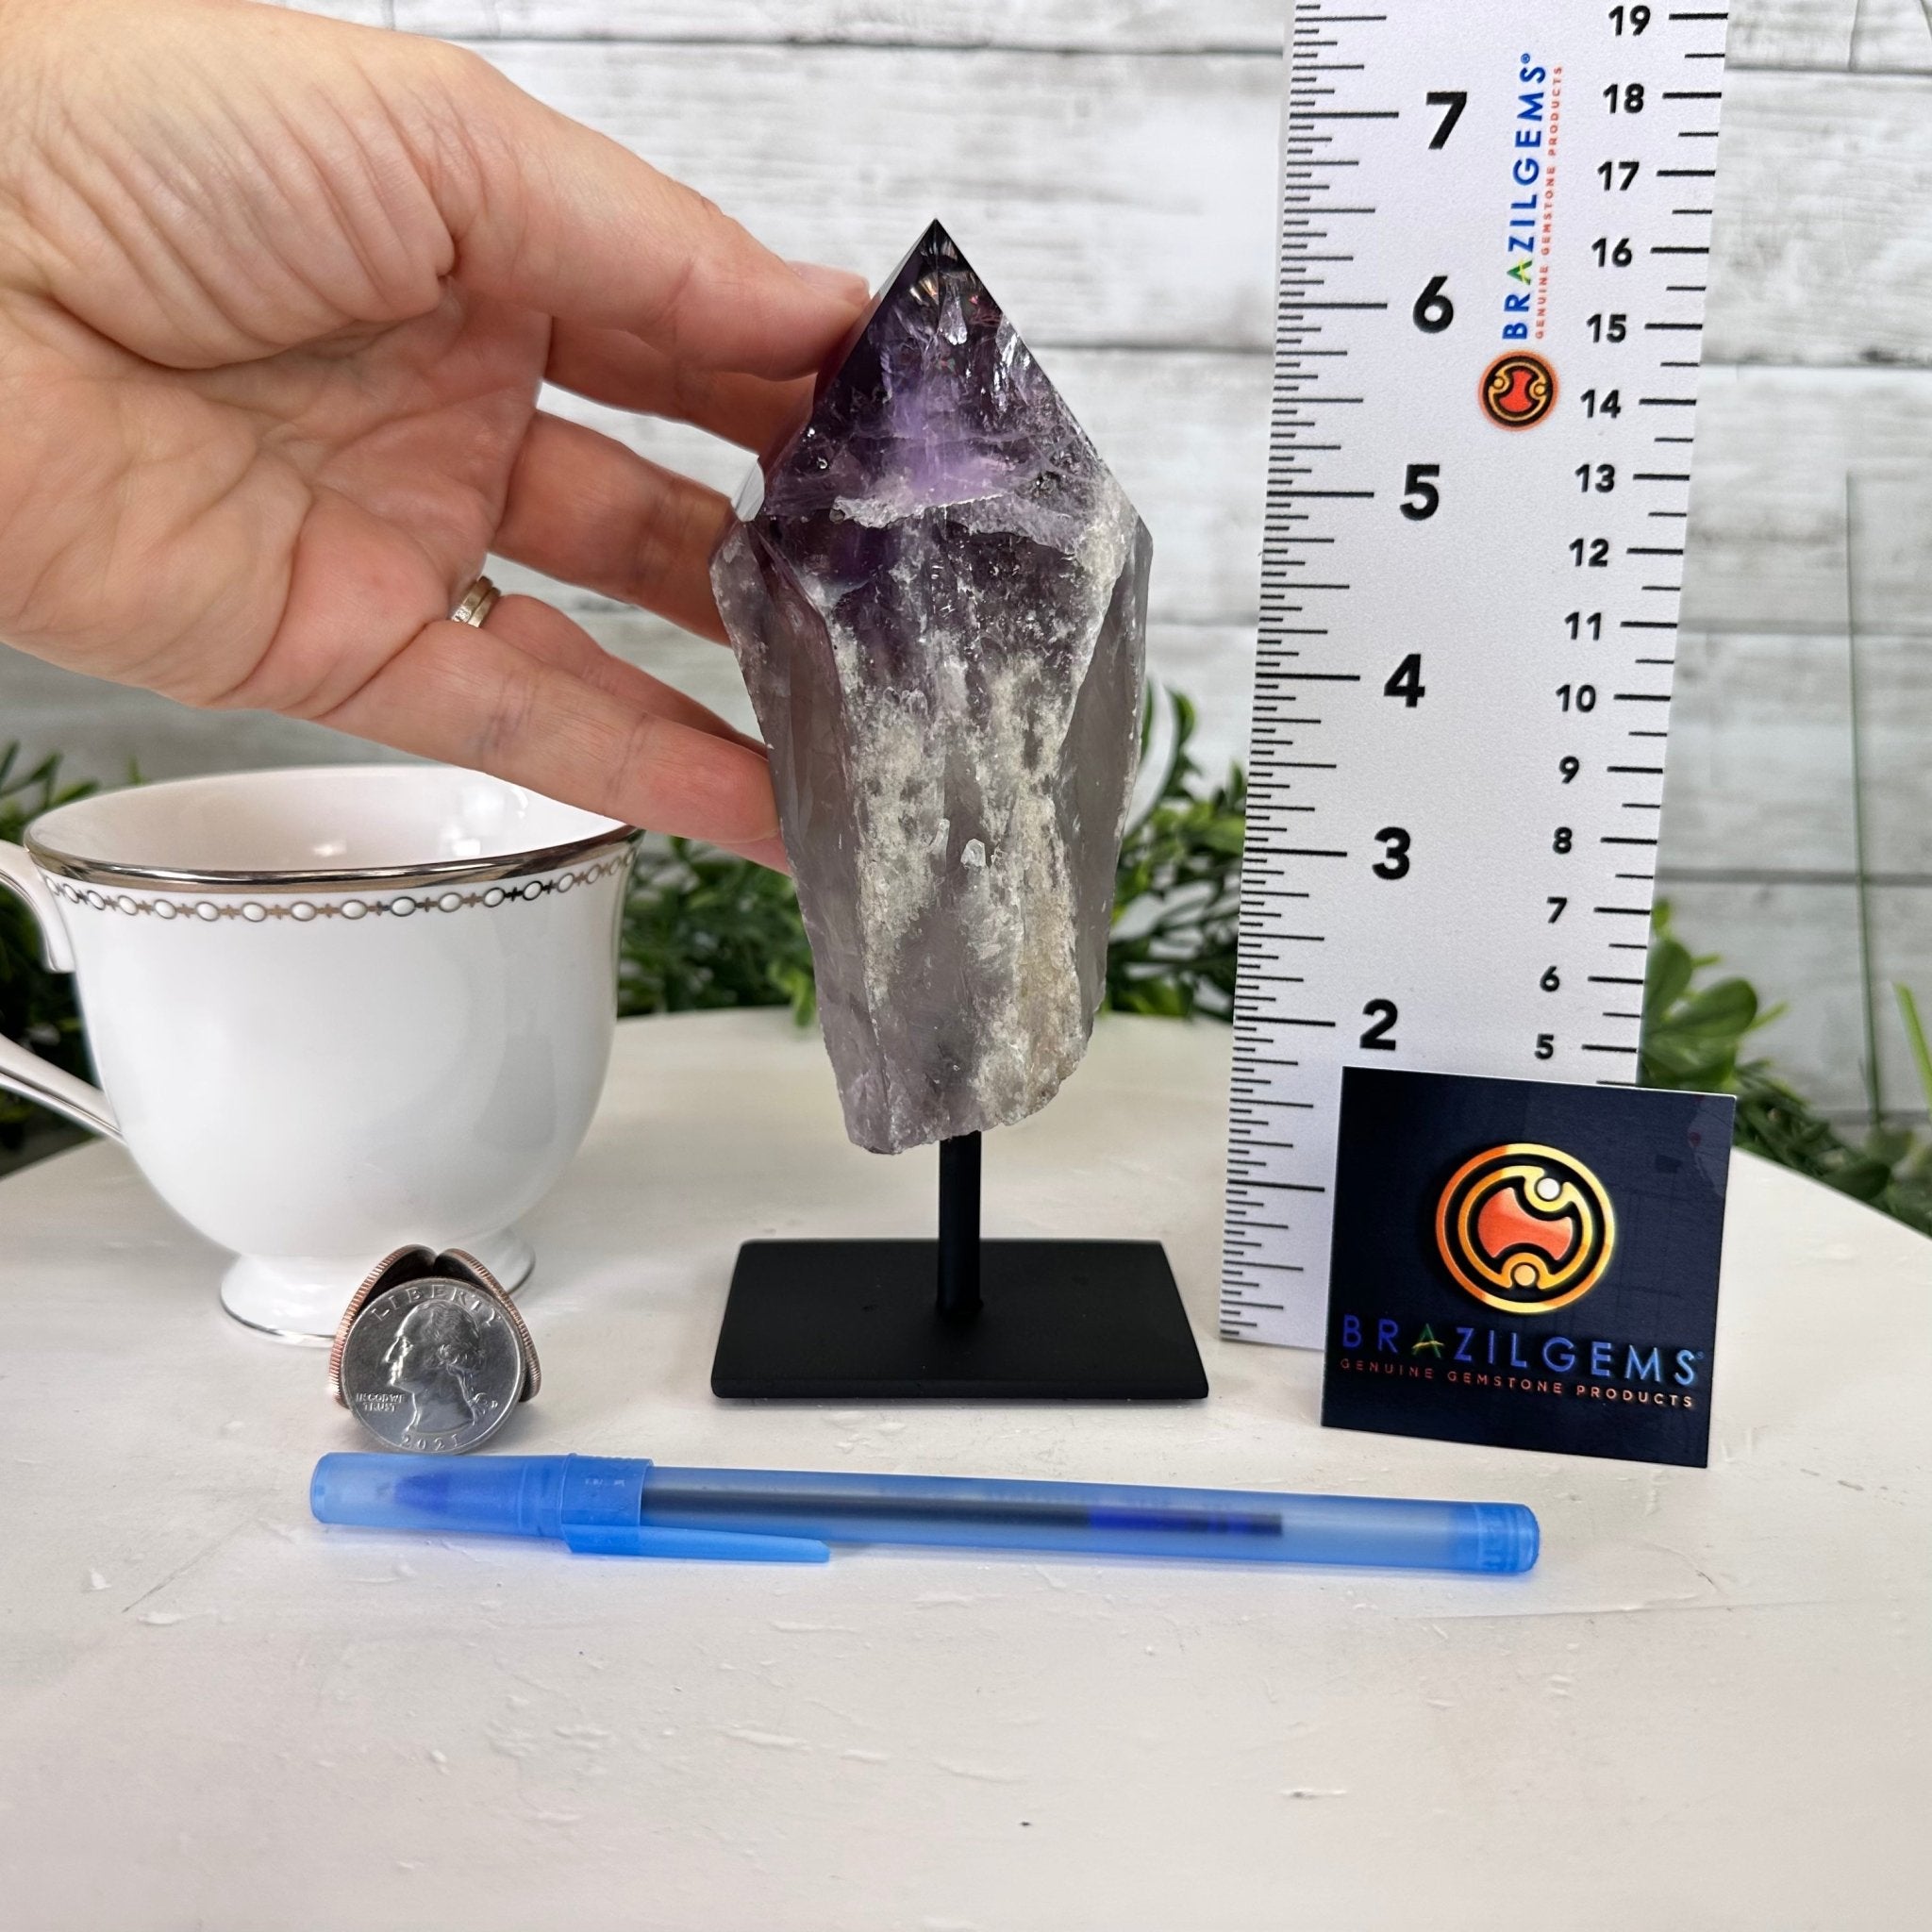 Amethyst Crystal Point on a Metal Stand, 6.1" Tall Model #3122AM-009 by Brazil Gems - Brazil GemsBrazil GemsAmethyst Crystal Point on a Metal Stand, 6.1" Tall Model #3122AM-009 by Brazil GemsCrystal Points3122AM-009